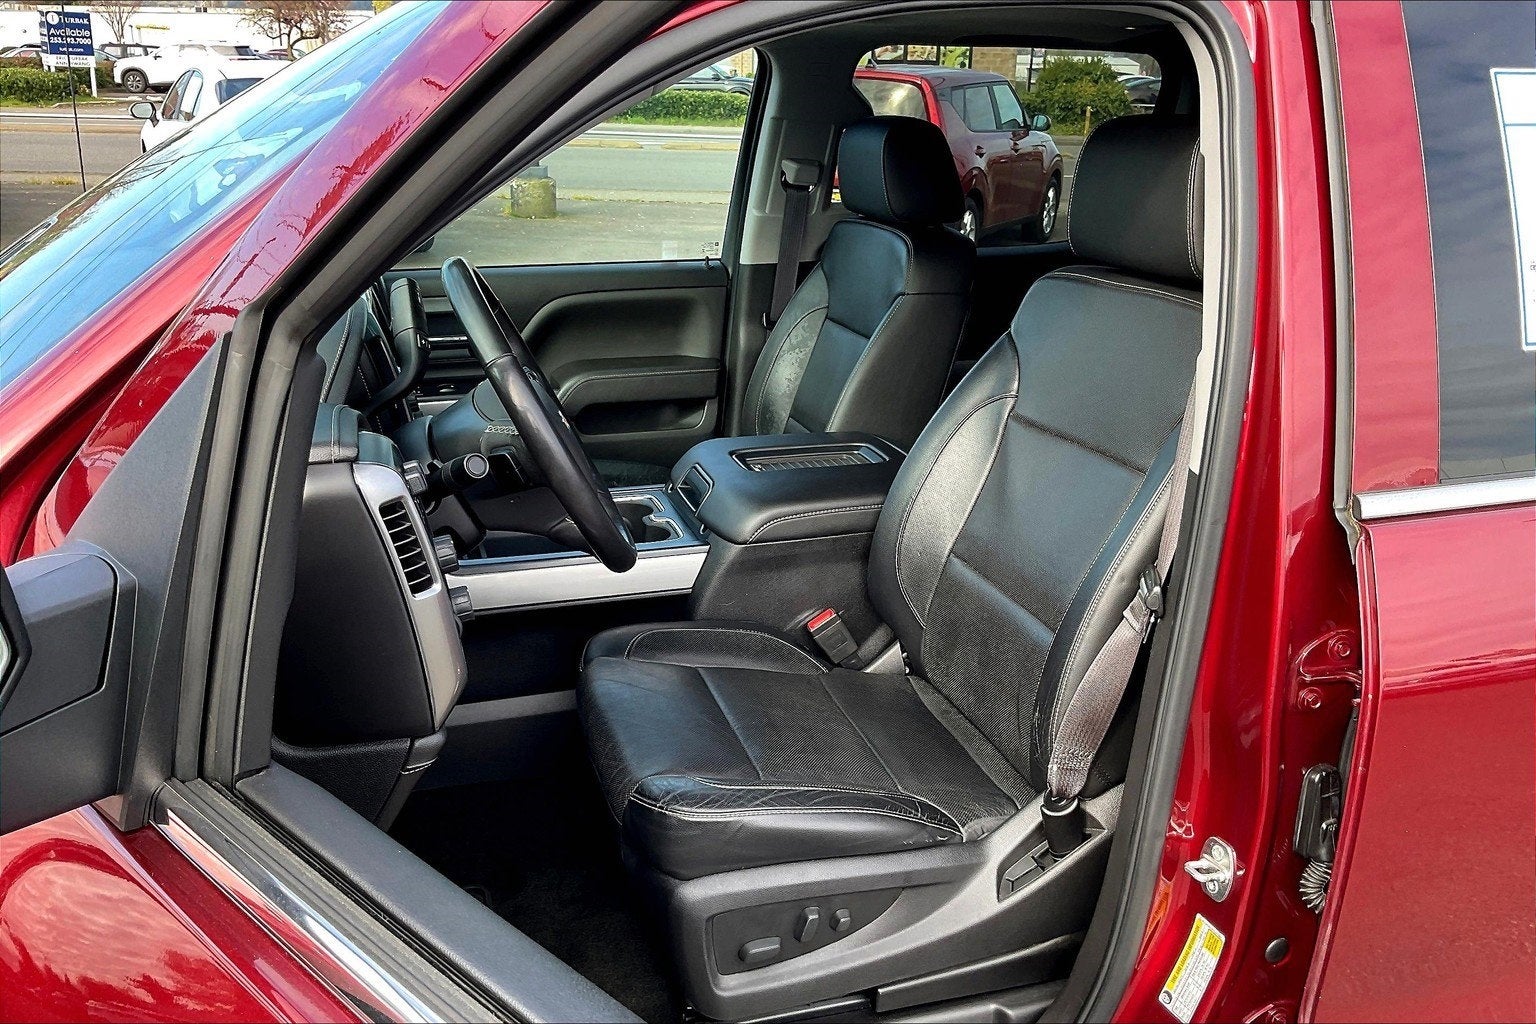 2017 Chevrolet Silverado 1500 LTZ 2LZ